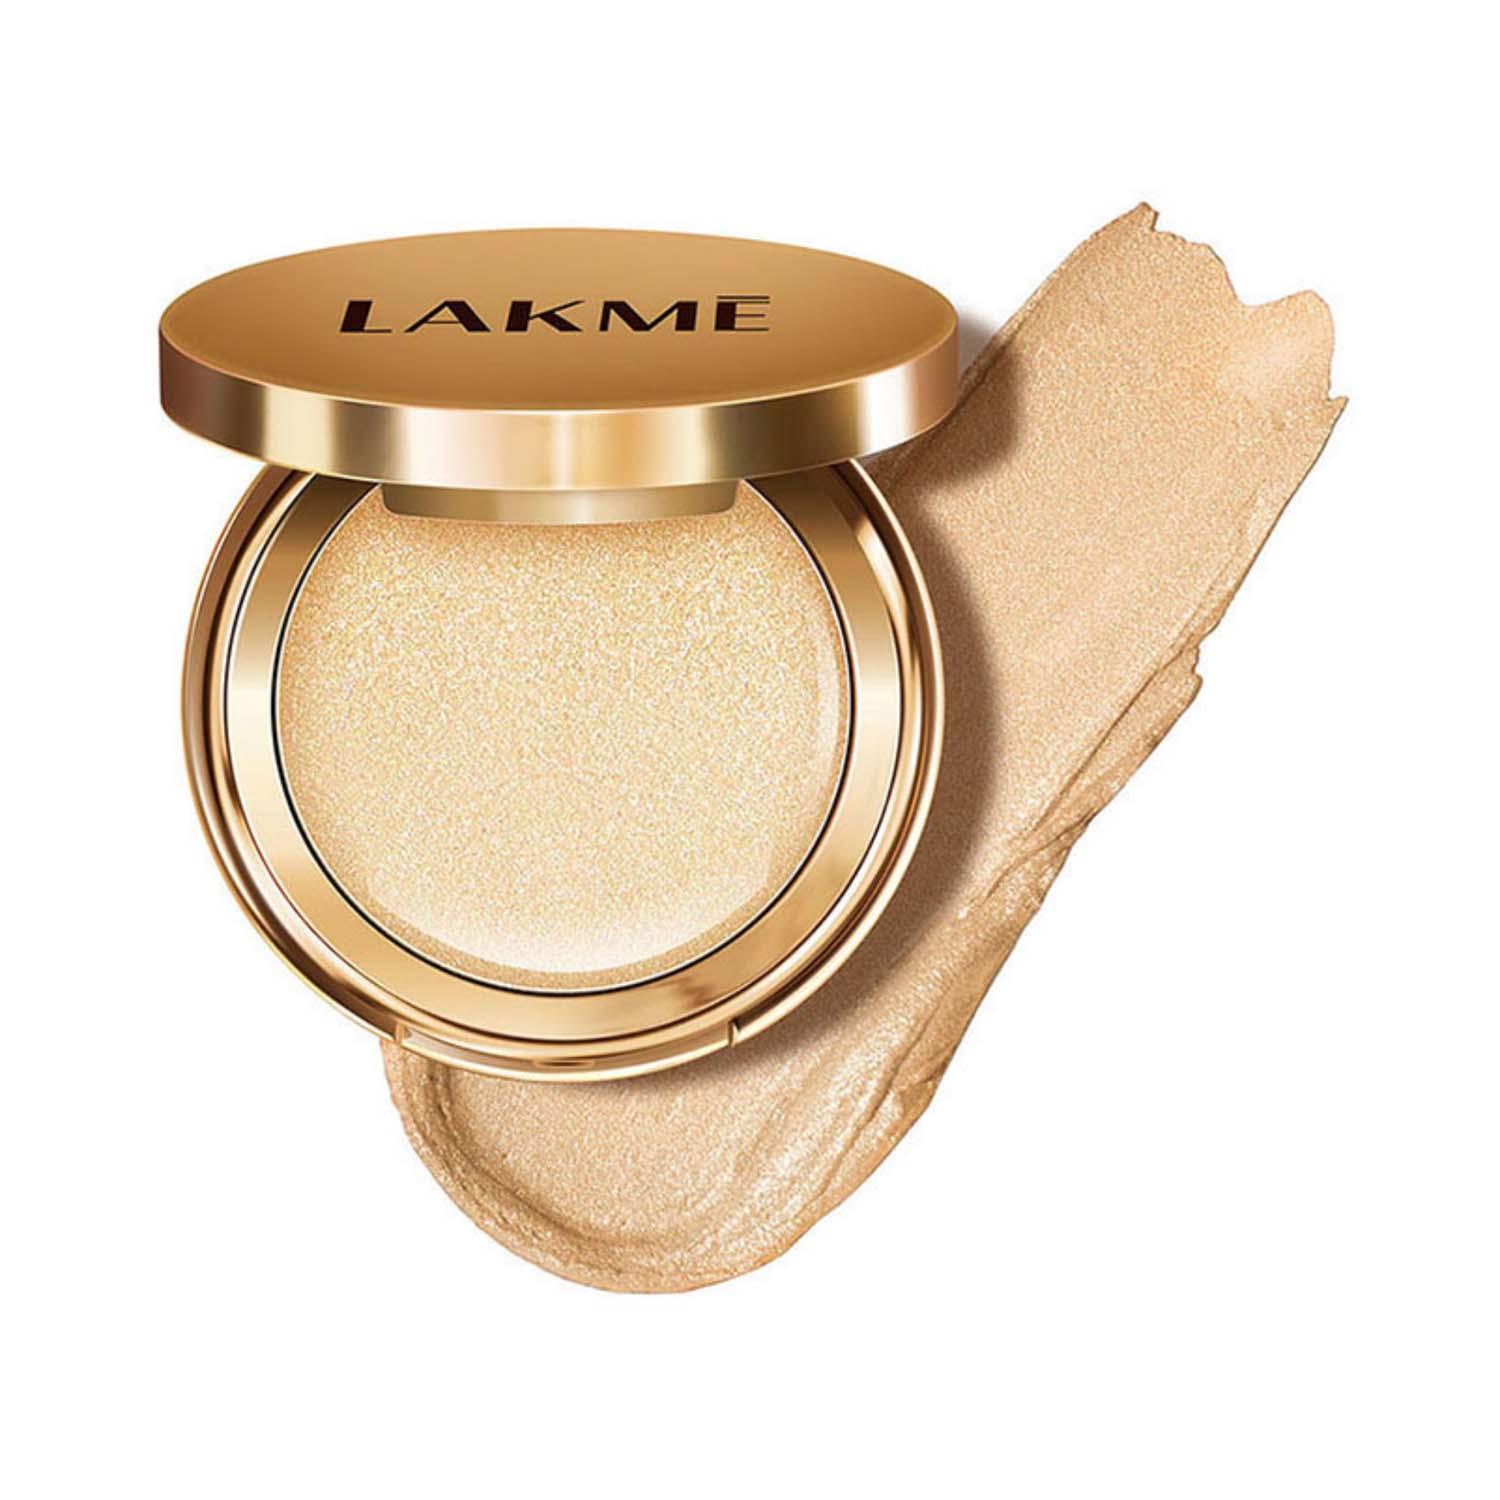 Lakme 9 To 5 Powerplay Velvet Crème Highlighter - Sultry Gold (9g)